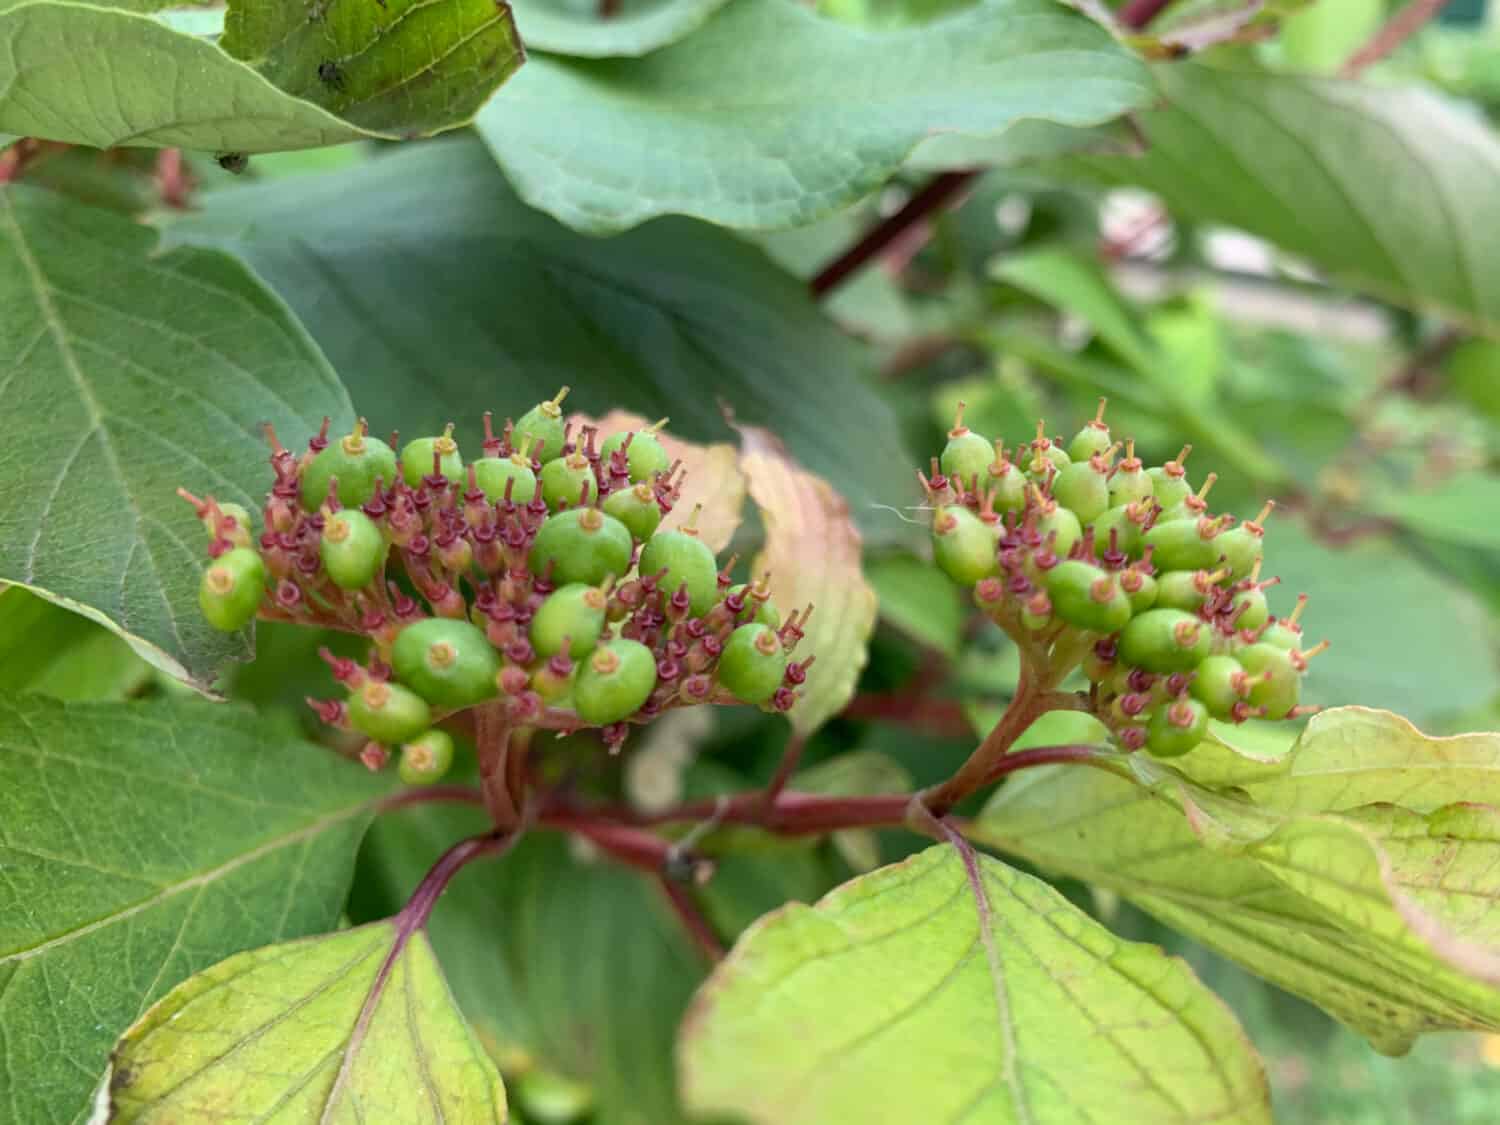 Gray dogwood (Cornus racemosa) fruits.